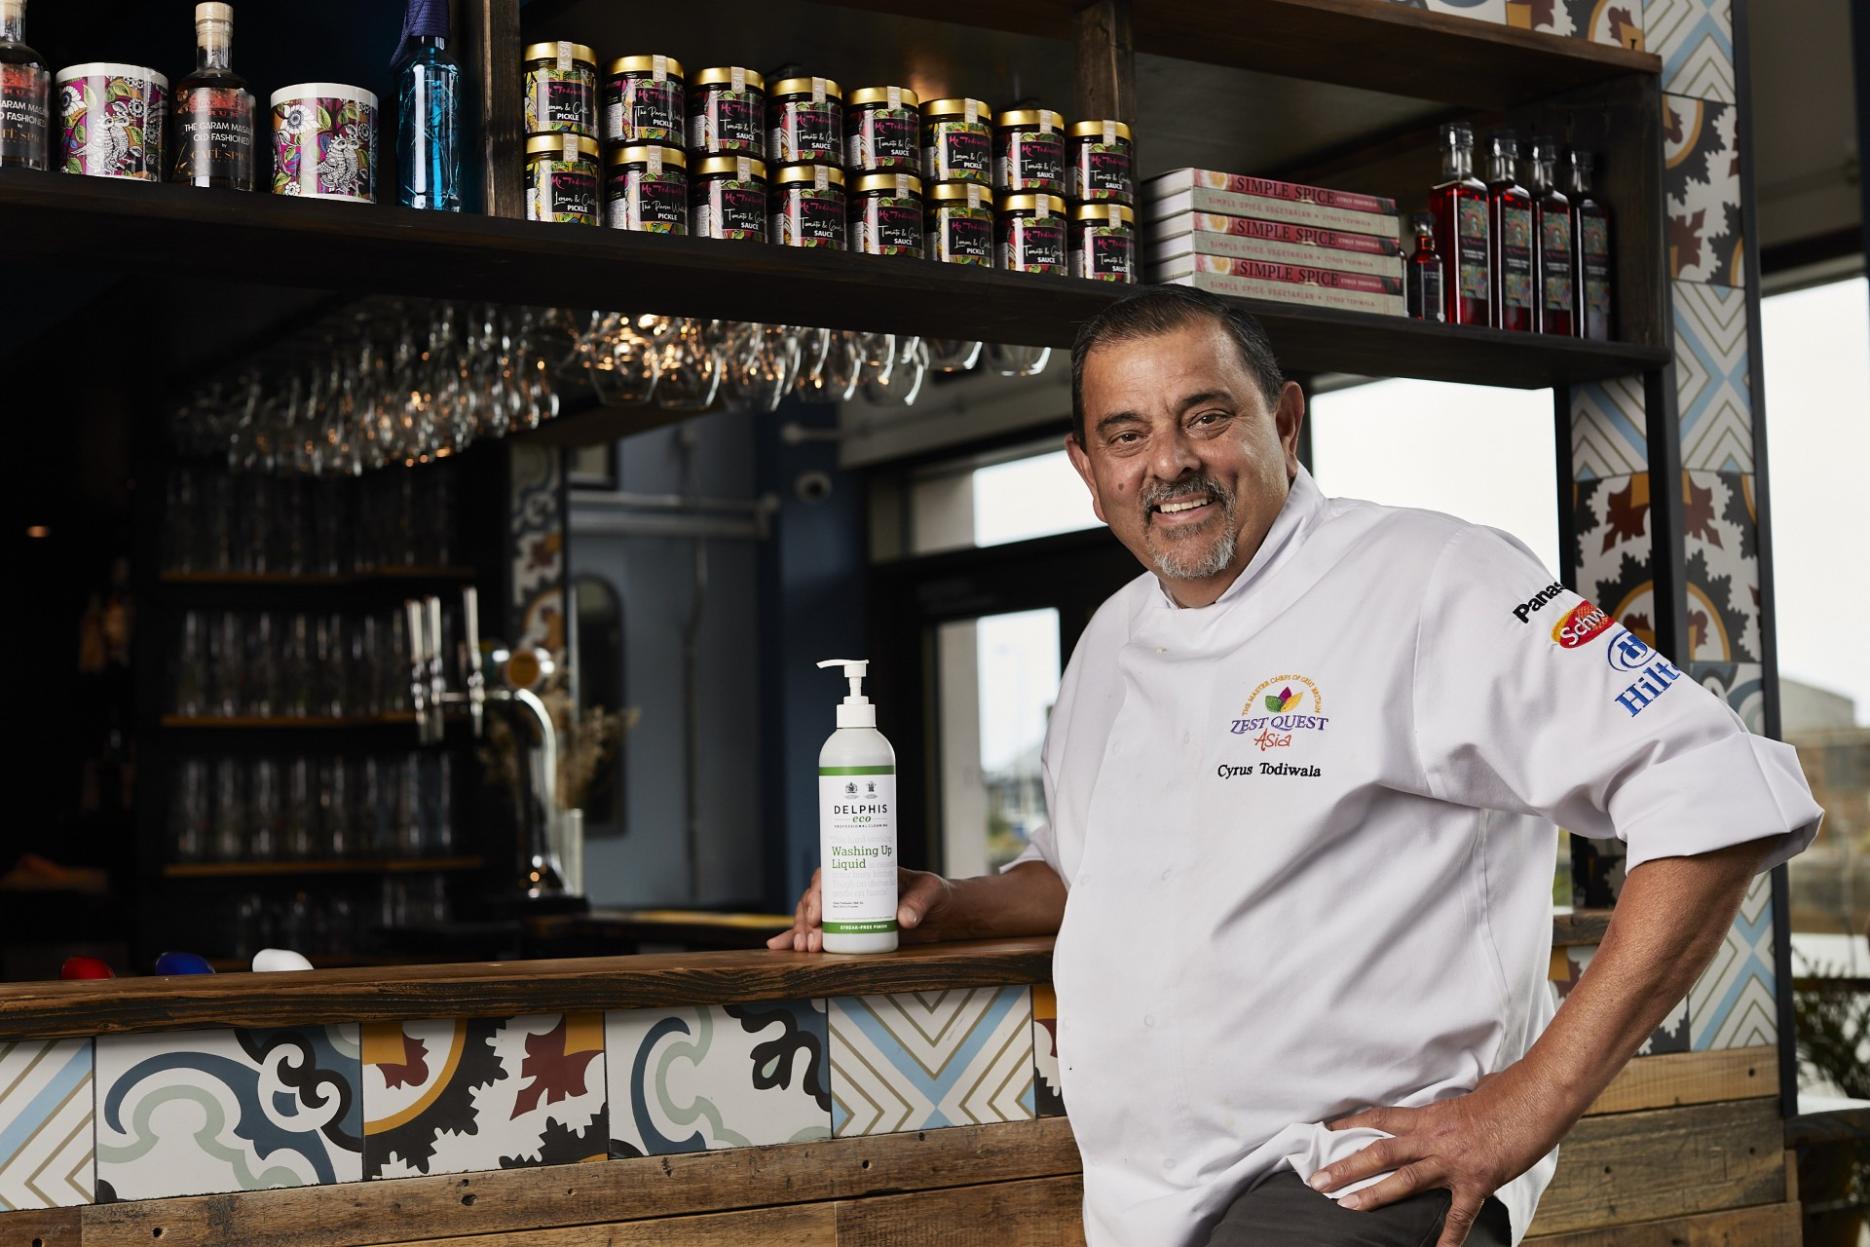 Delphis Eco names next hero chef as Cyrus Todiwala 